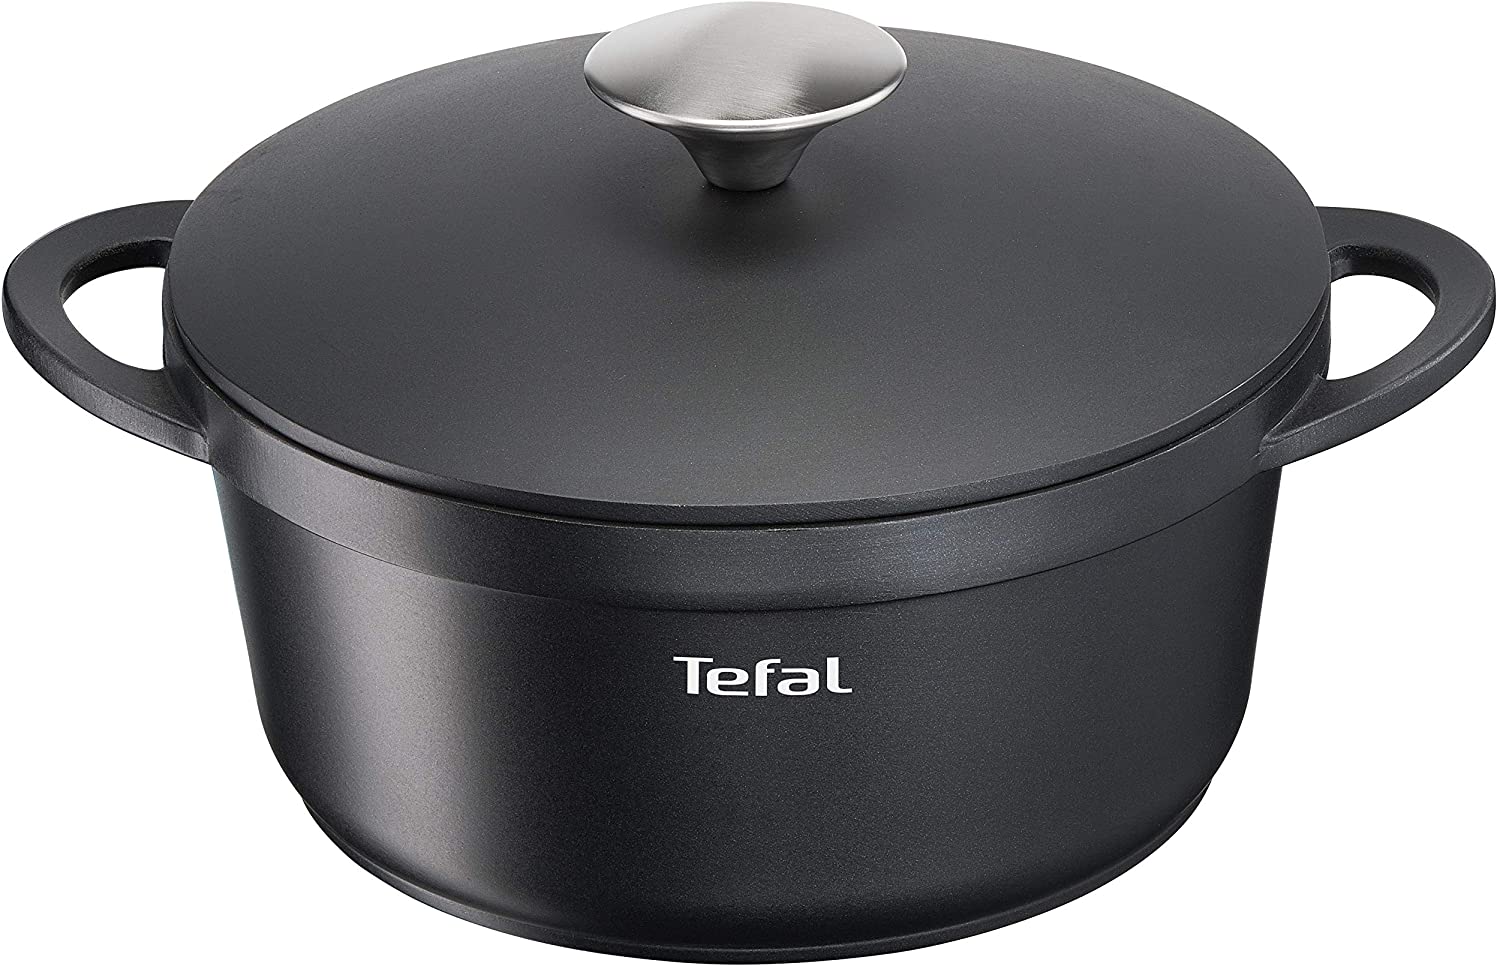 Tefal Trattoria Non-Stick Serving Pan with Cast Lid, Black, Black , 20cm